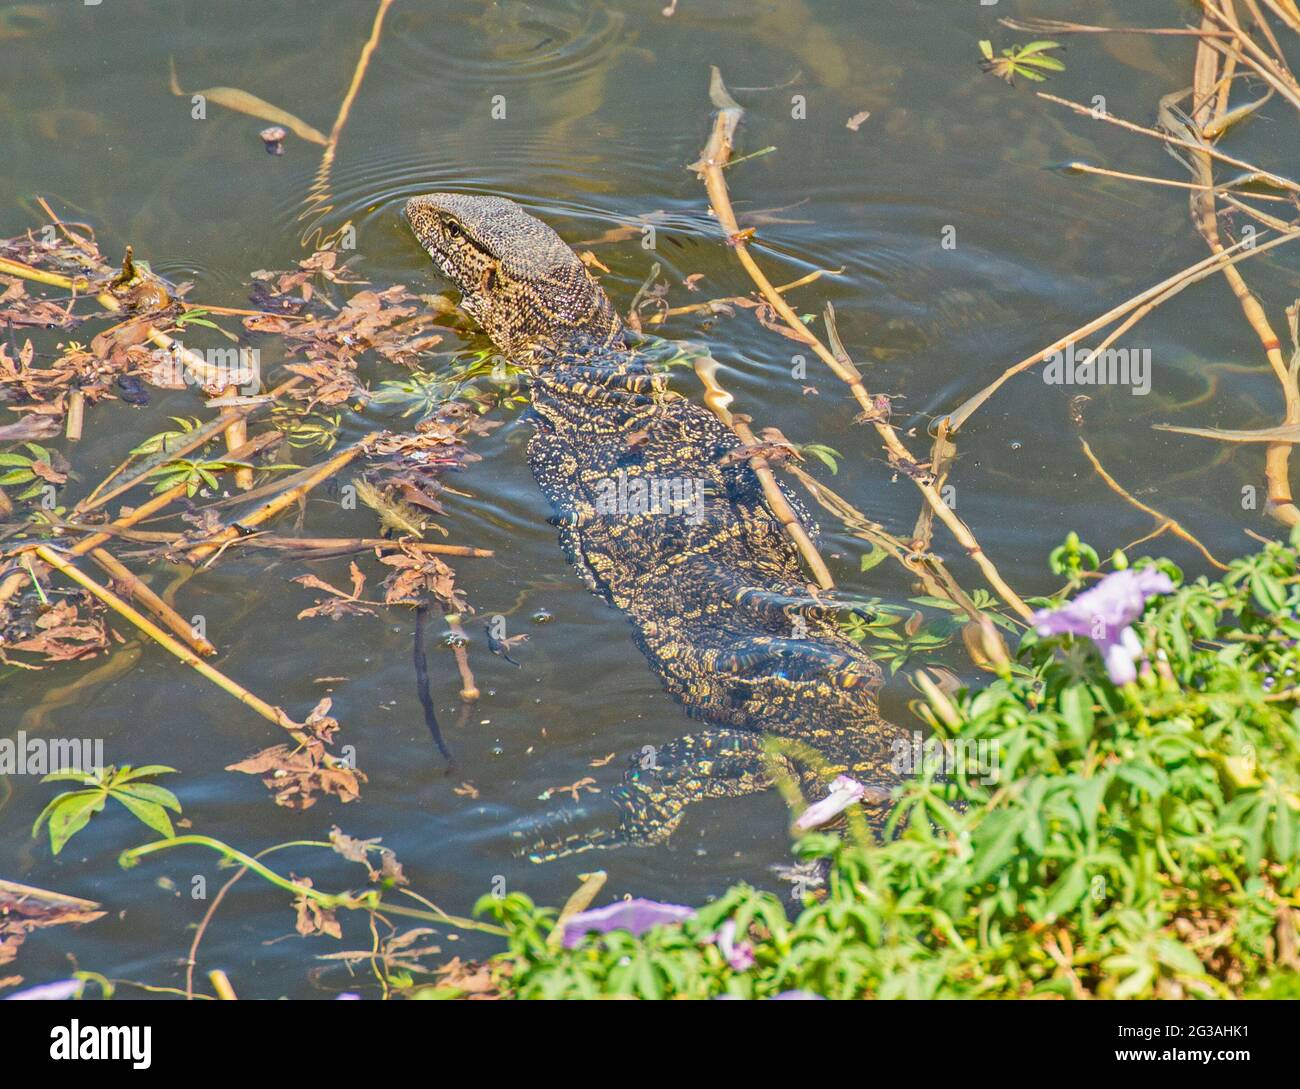 Nile monitor lizard varanus niloticus swimming on edge of river bank wetland in grass reeds Stock Photo